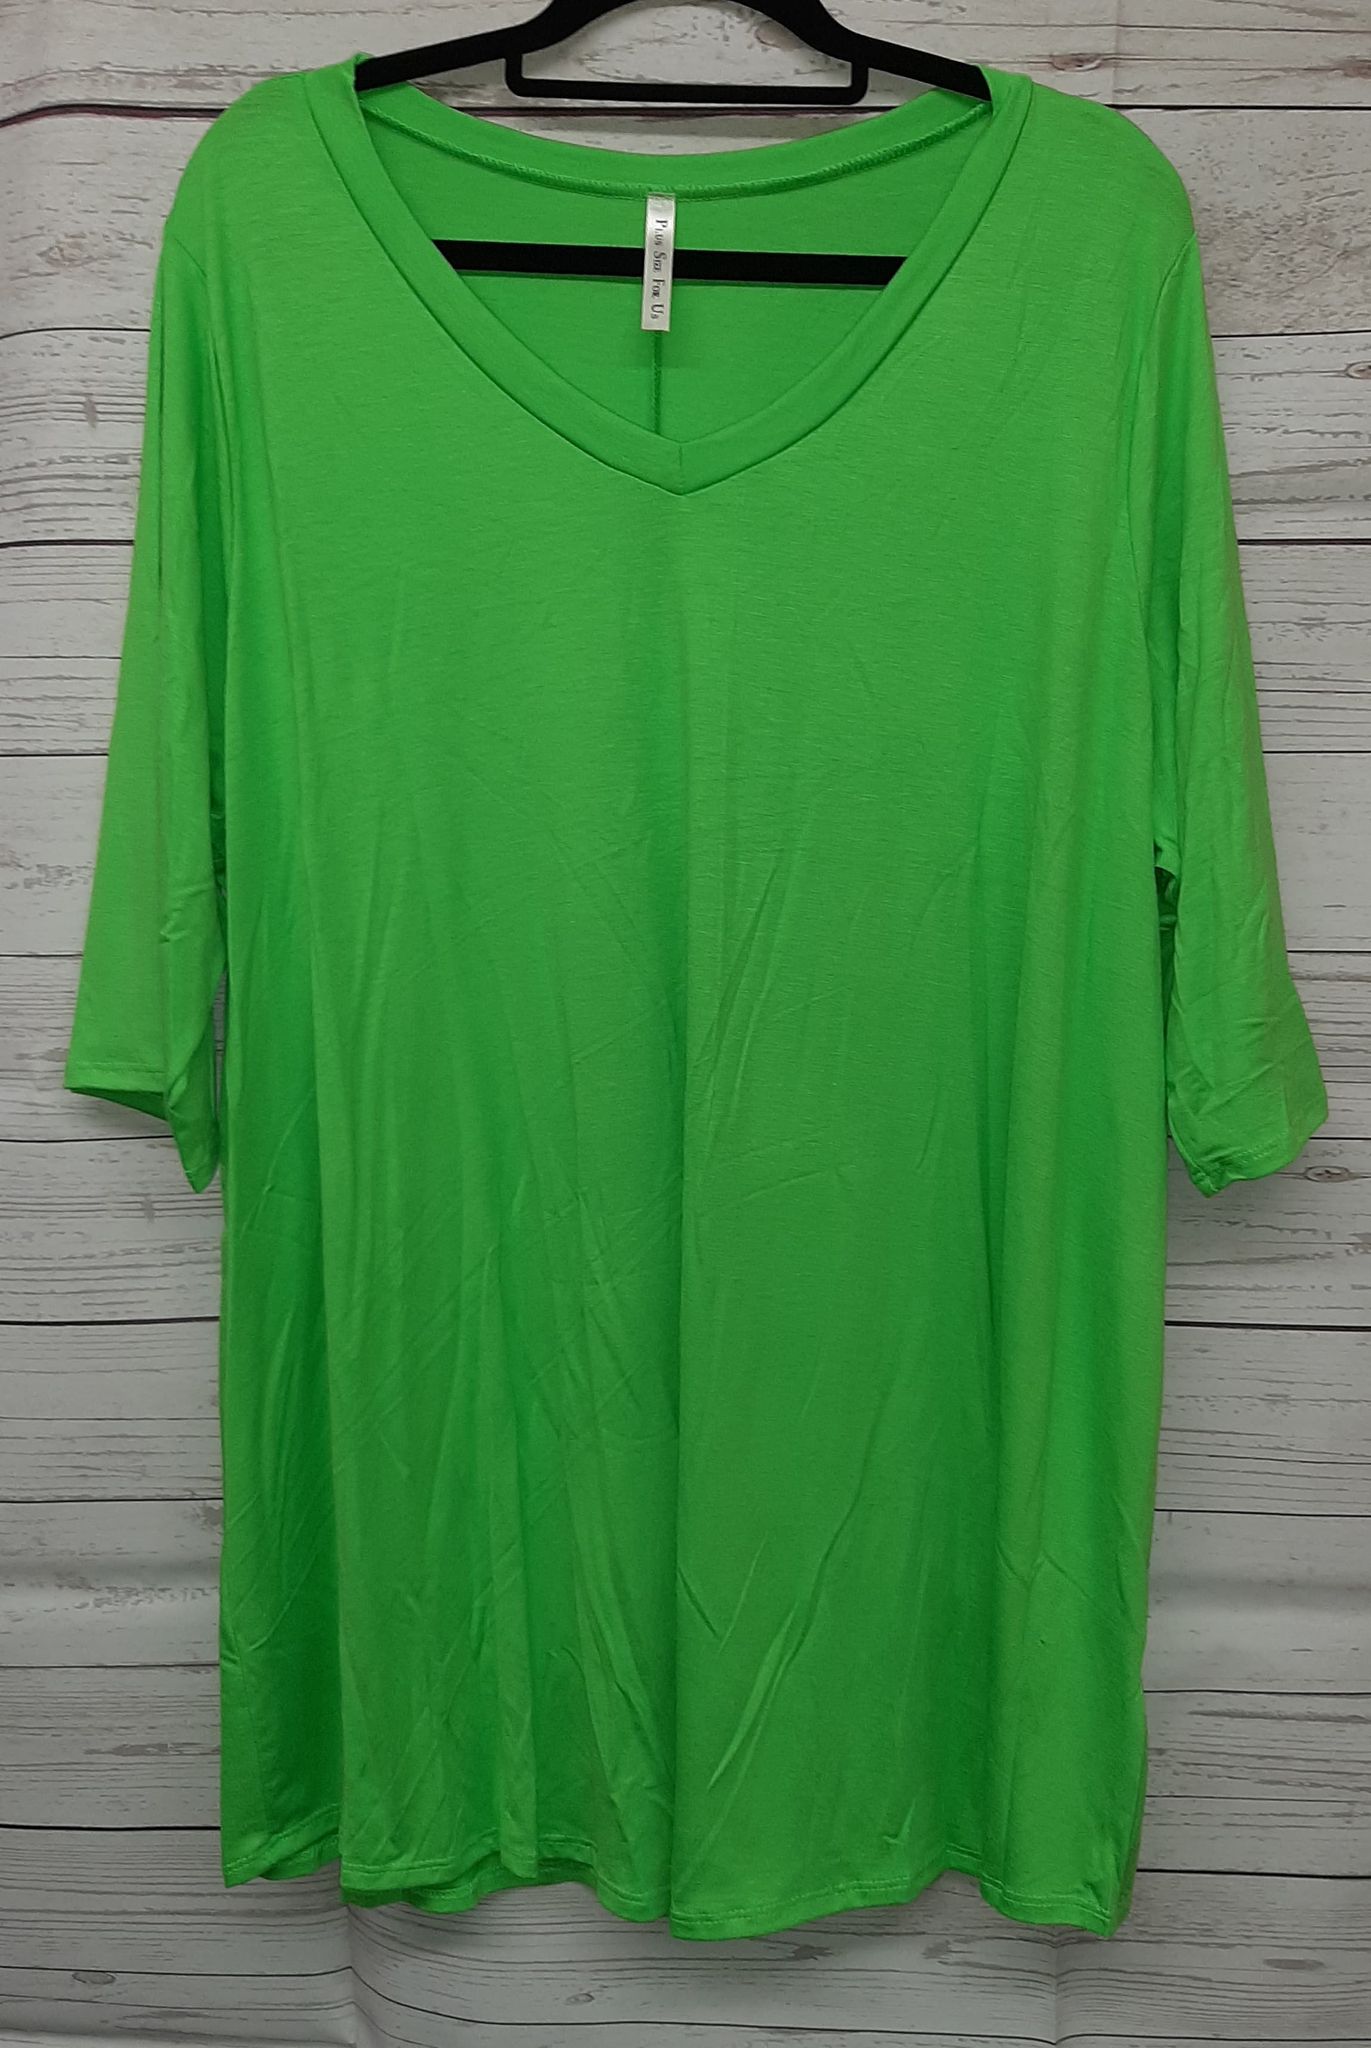 PSFU Bright Green V Neck Short Sleeve Shirt